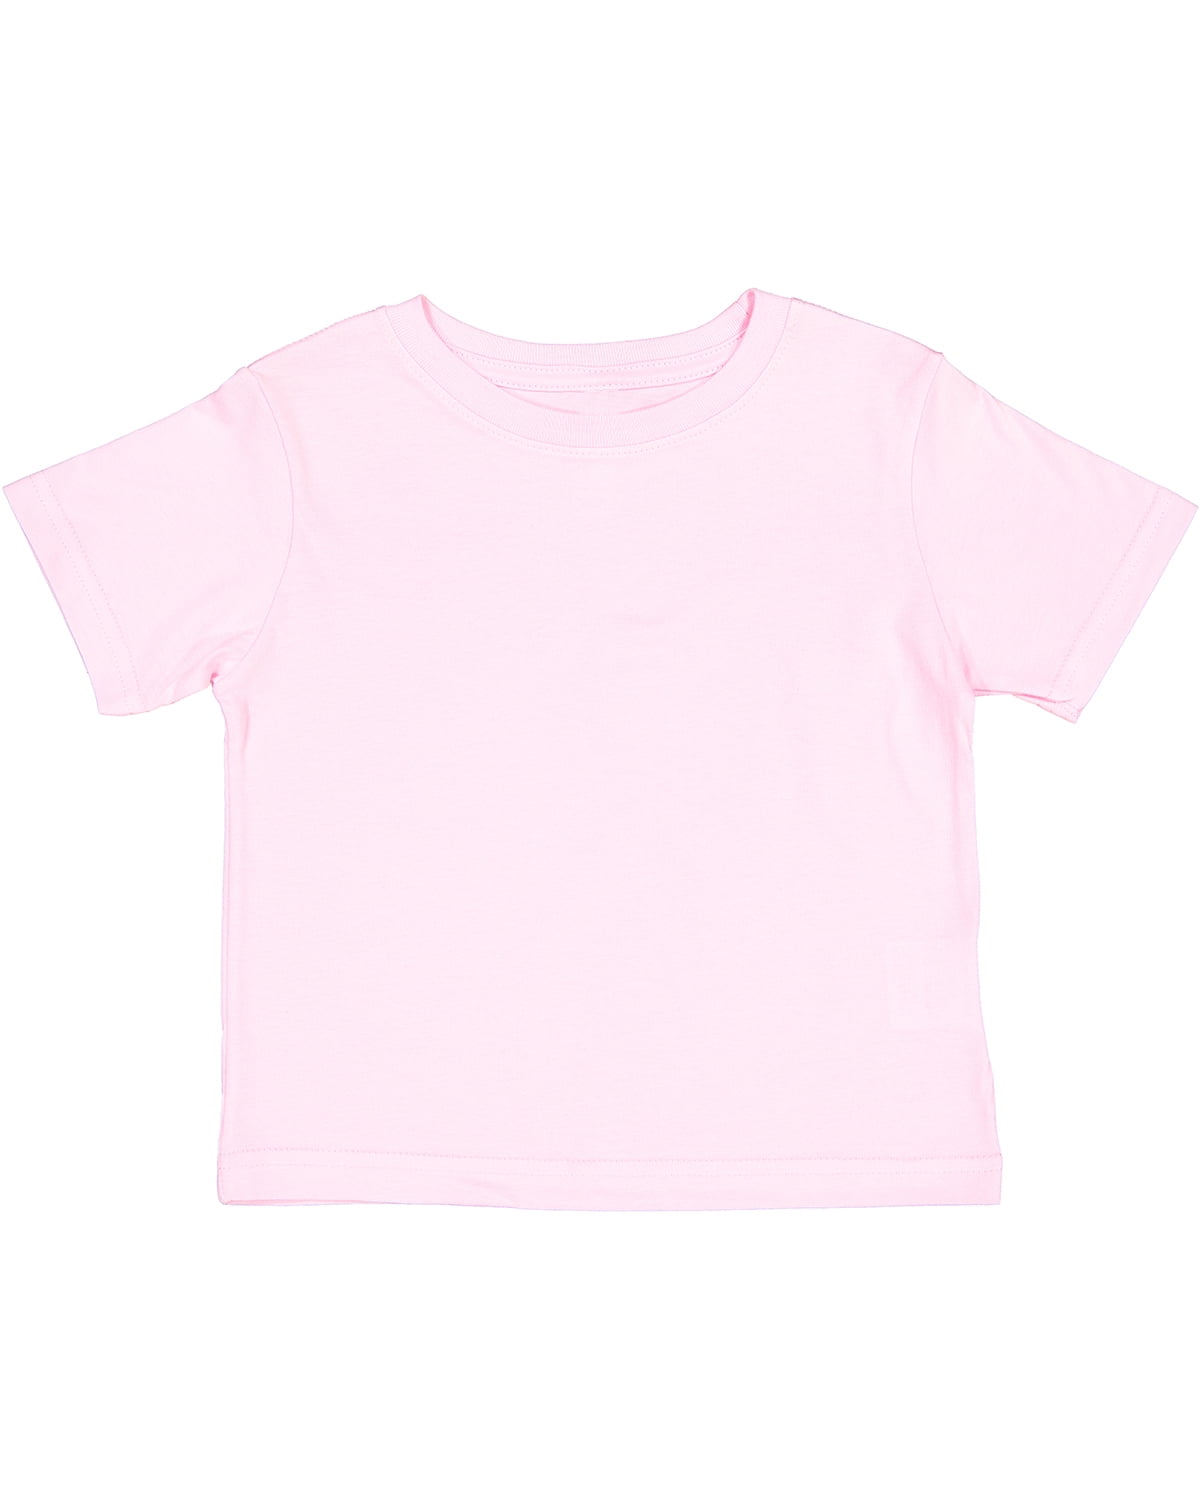 Toddler Clementine Short Sleeve Basic T-Shirt - Walmart.com